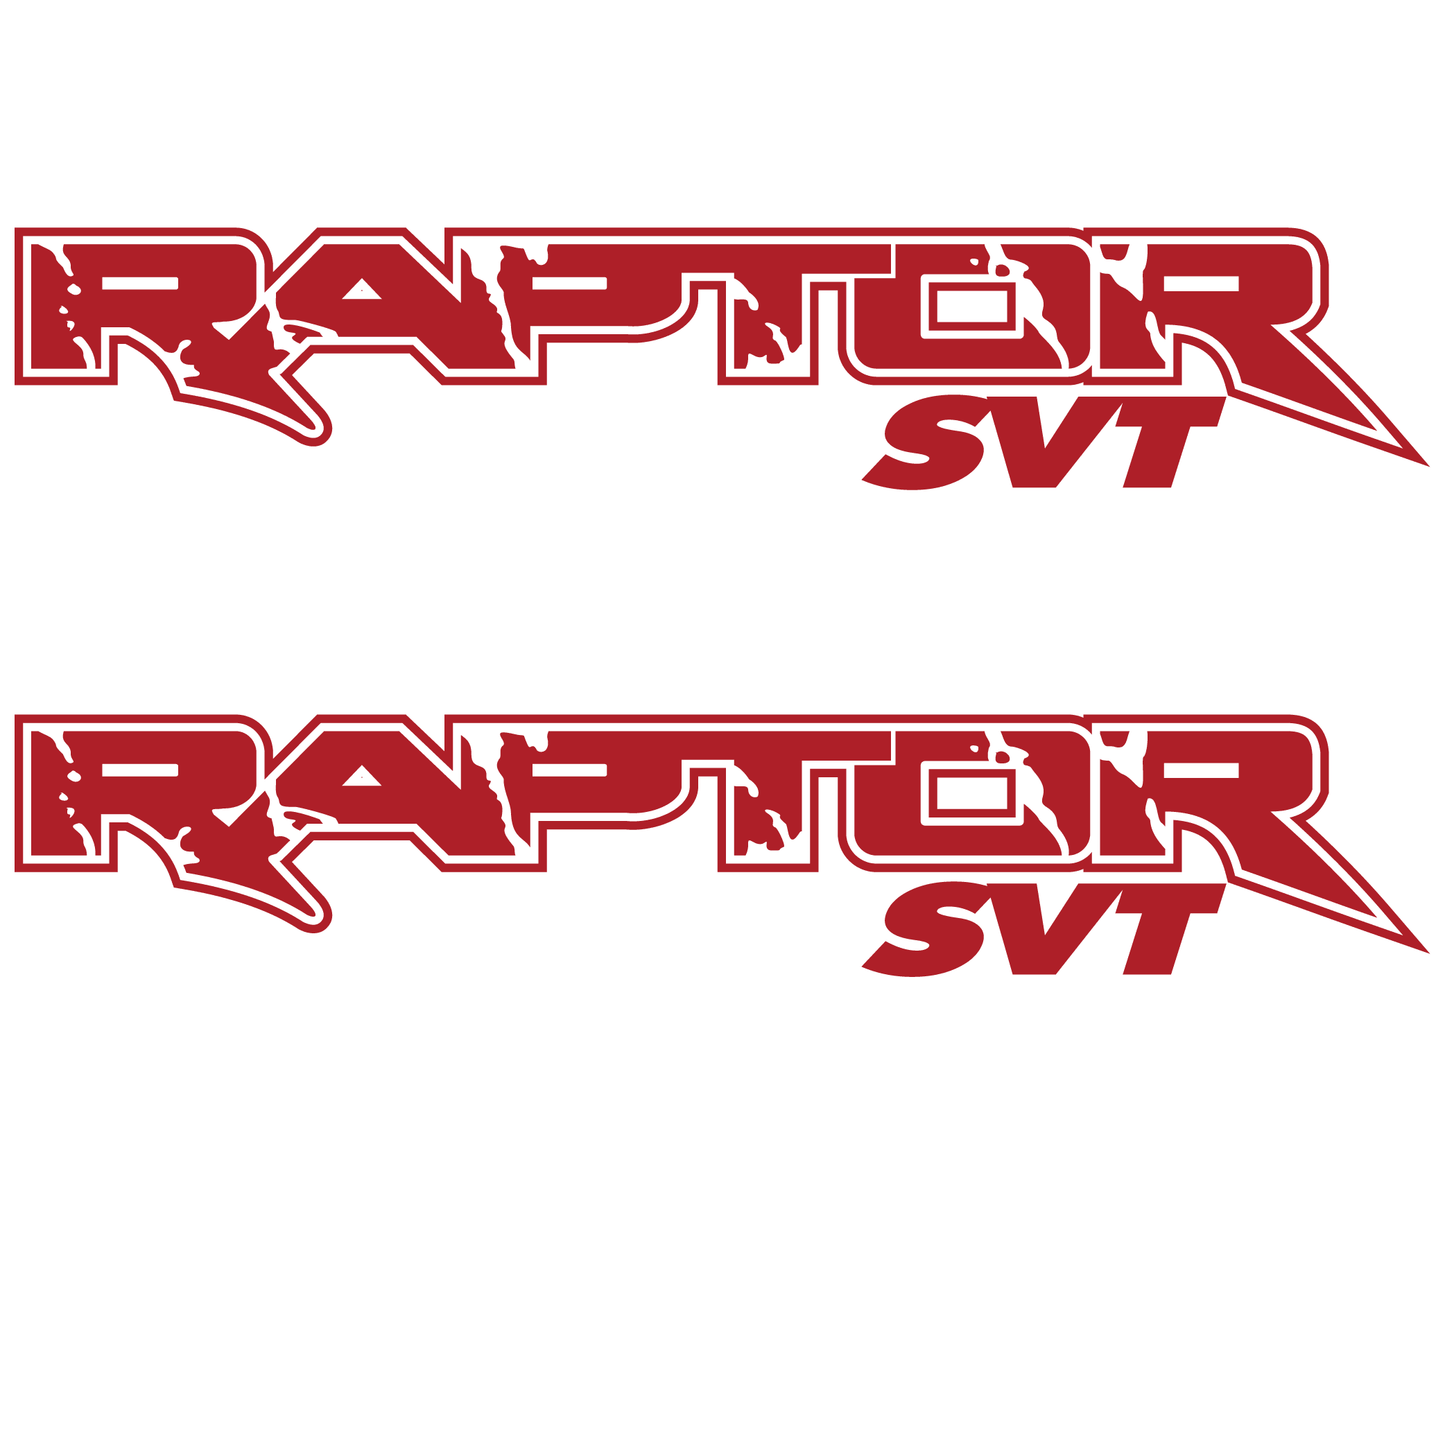 Shop Vinyl Design F-150 Raptor SVT Replacement Bedside Decals #010 Vehicle Decal Red Gloss Shop Vinyl Design decals stickers